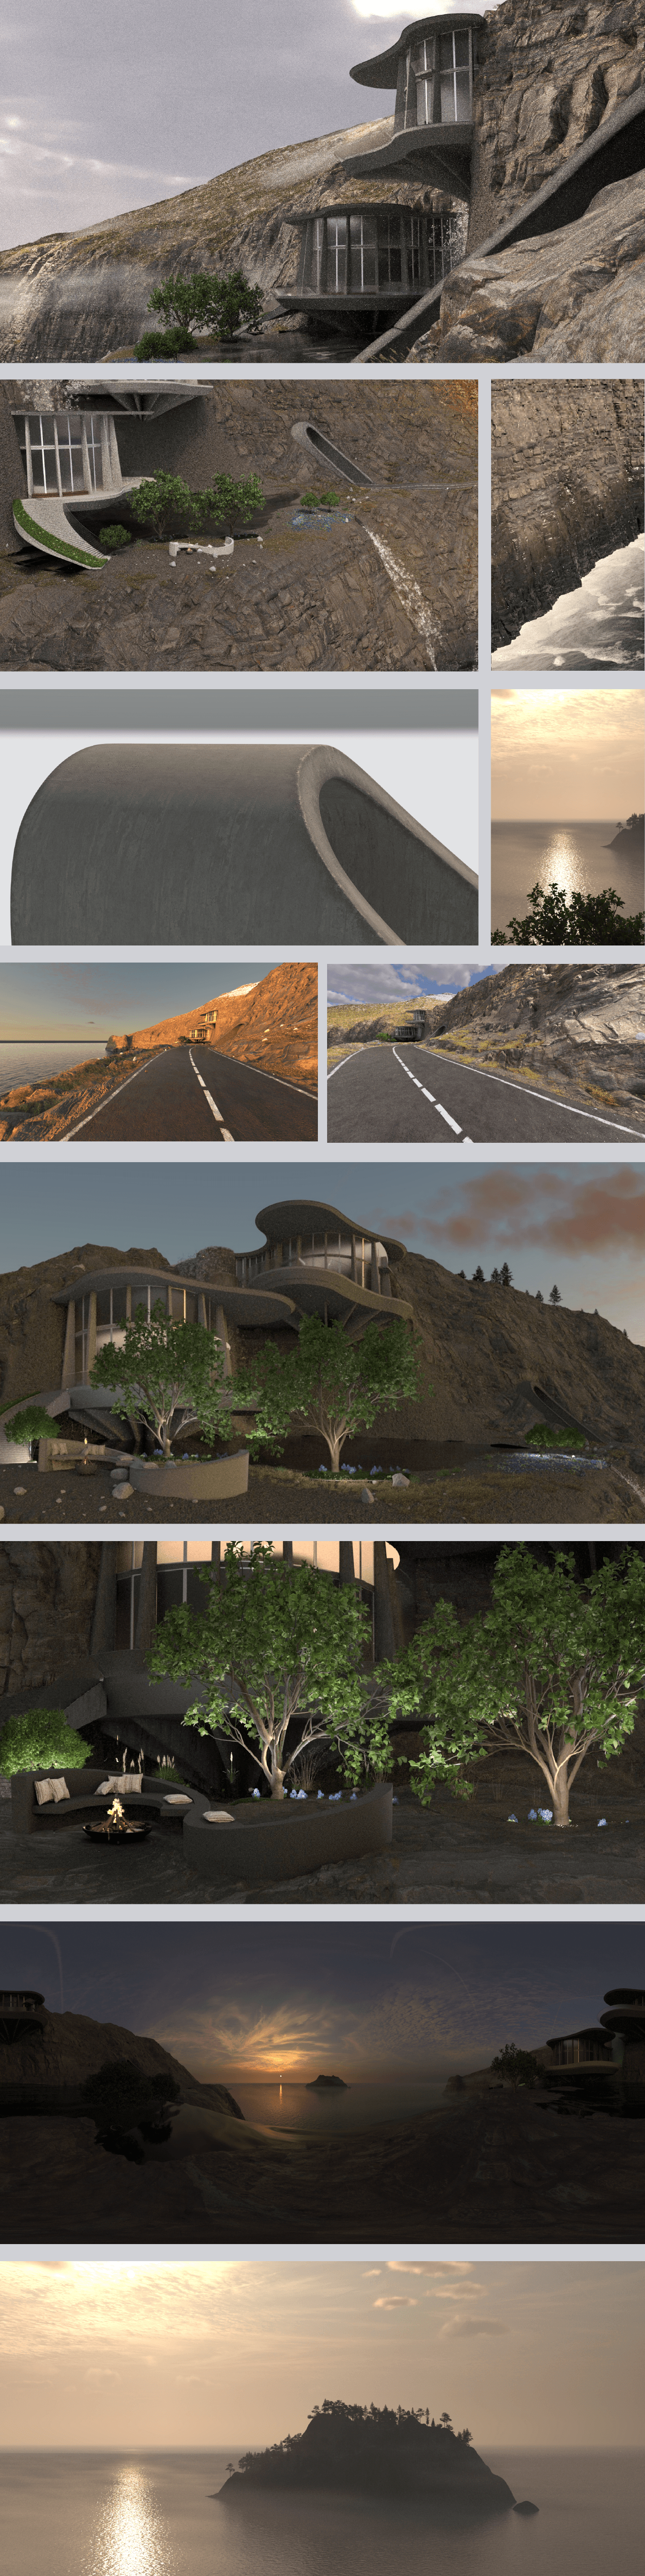 3D environment archviz 3ds max vray architecture visualizing cg environment world creator